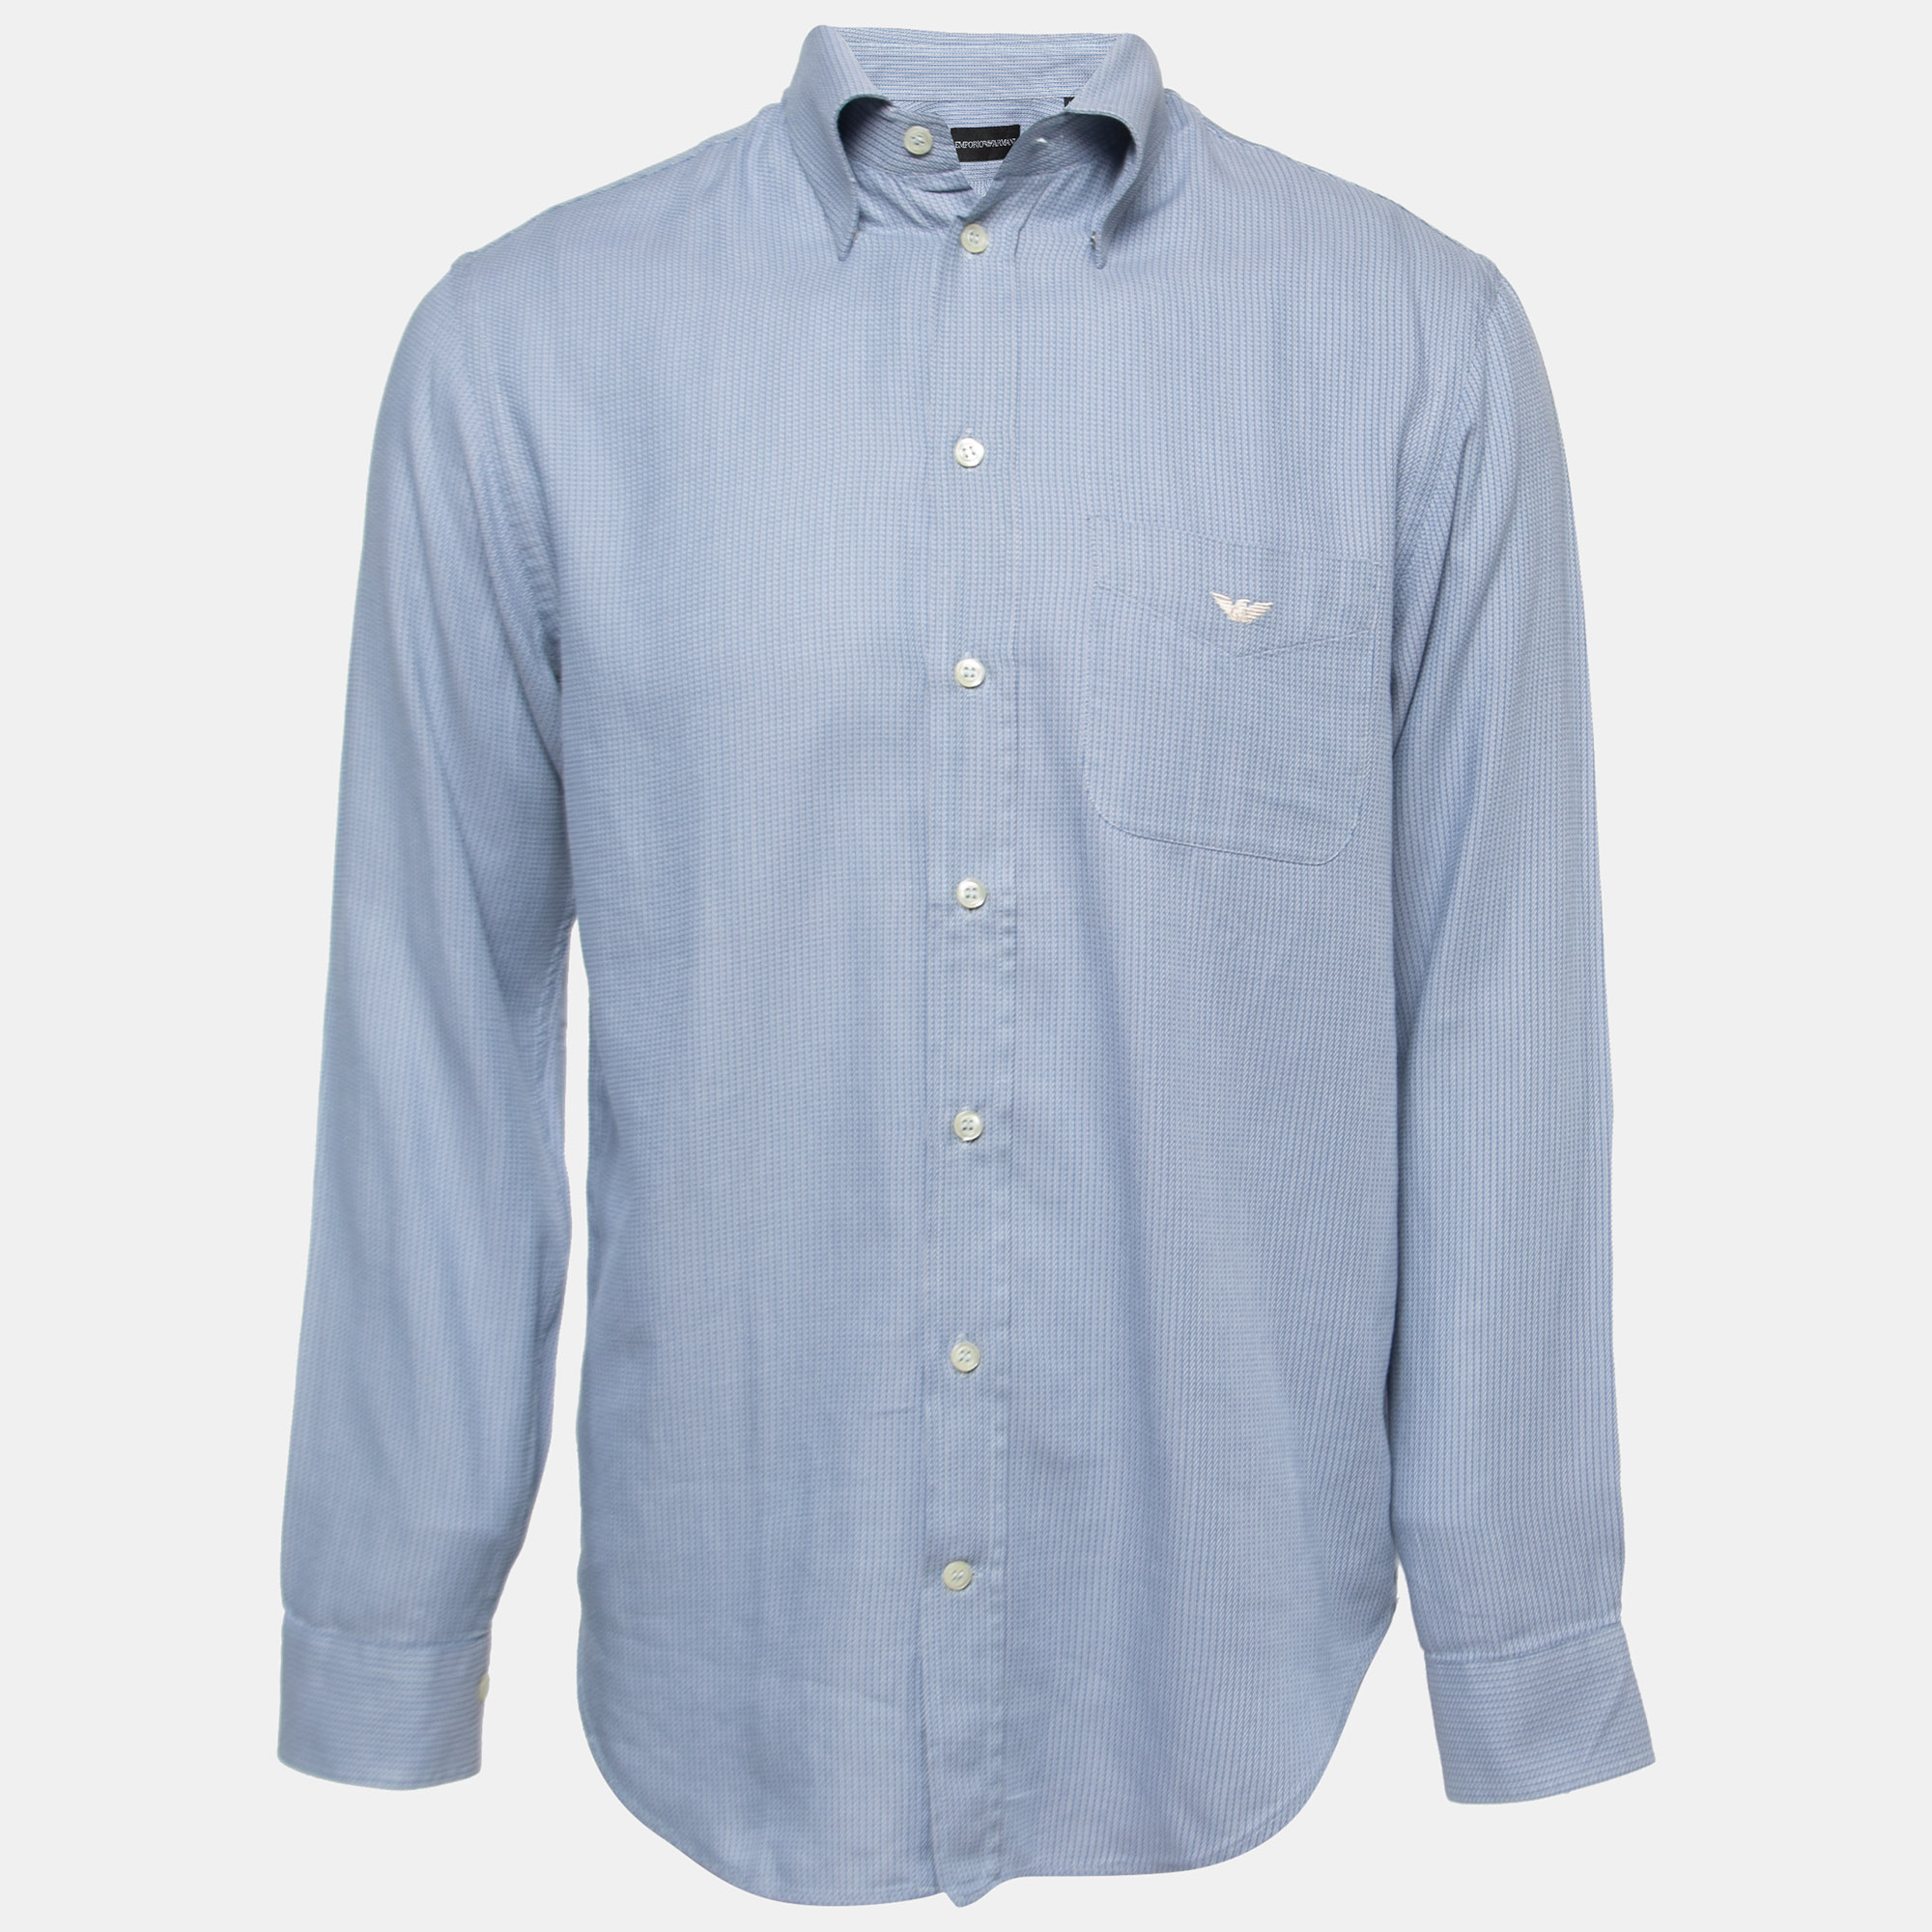 Emporio Armani Blue Patterned Cotton Full Sleeve Shirt M